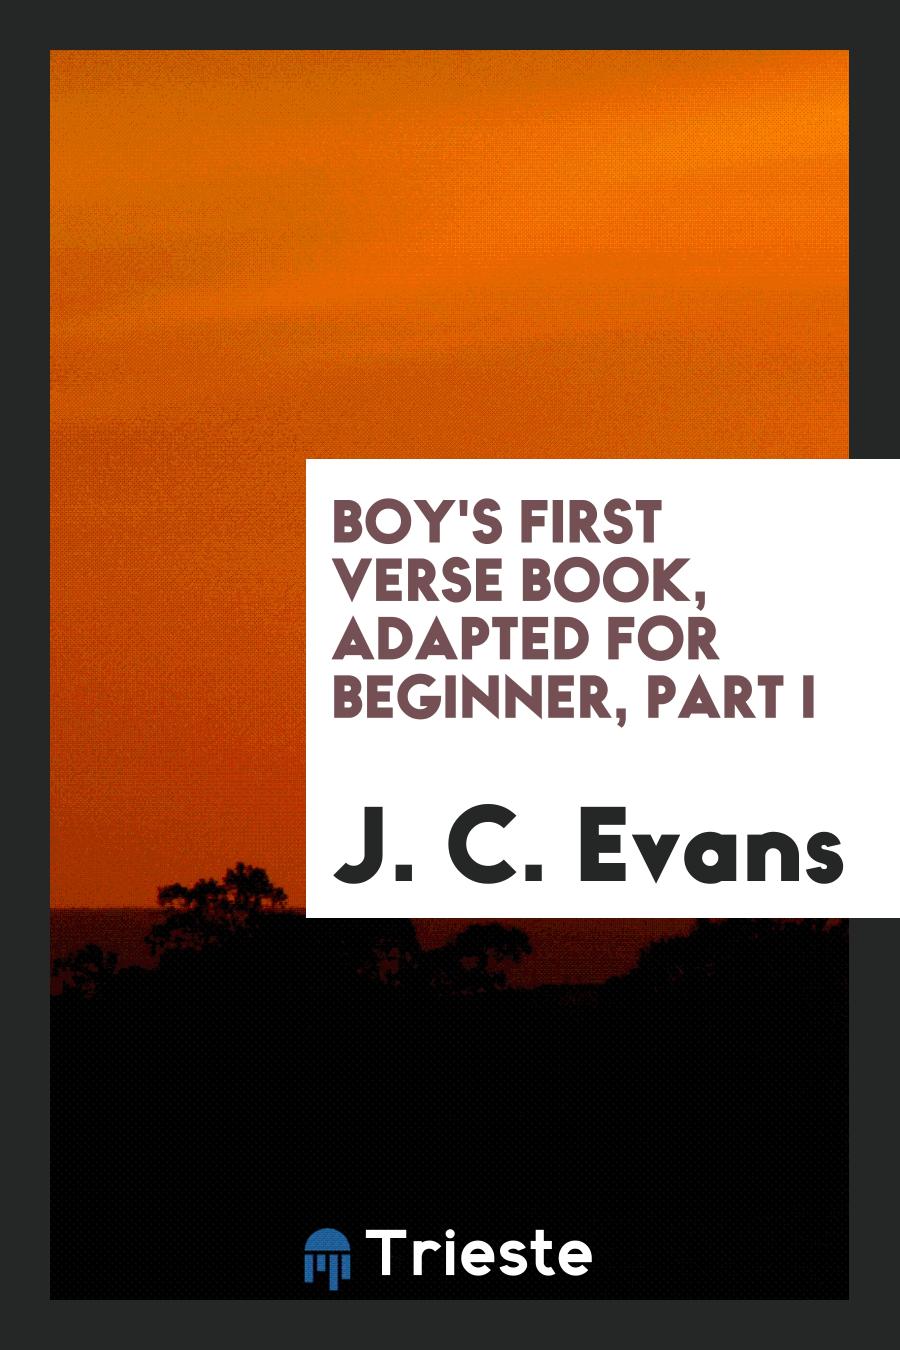 Boy's first verse book, adapted for beginner, part I